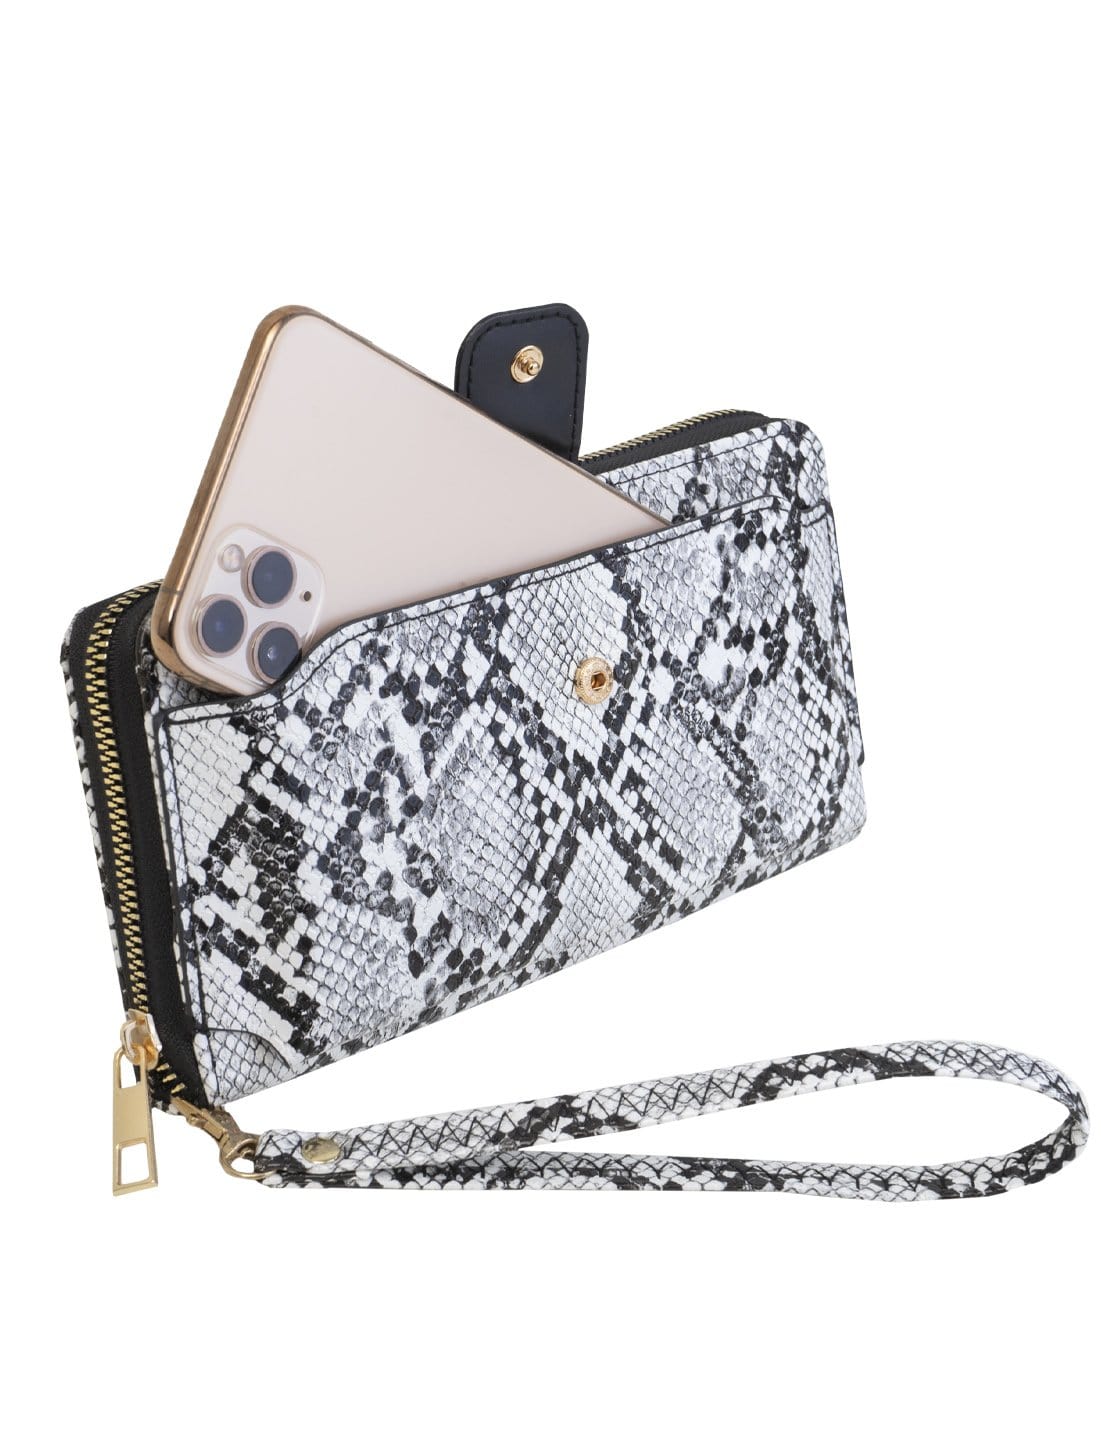 Rebecca & Rifka Vegan Python Snakeskin Leather Zip Around Phone Case Wristlet Wallet